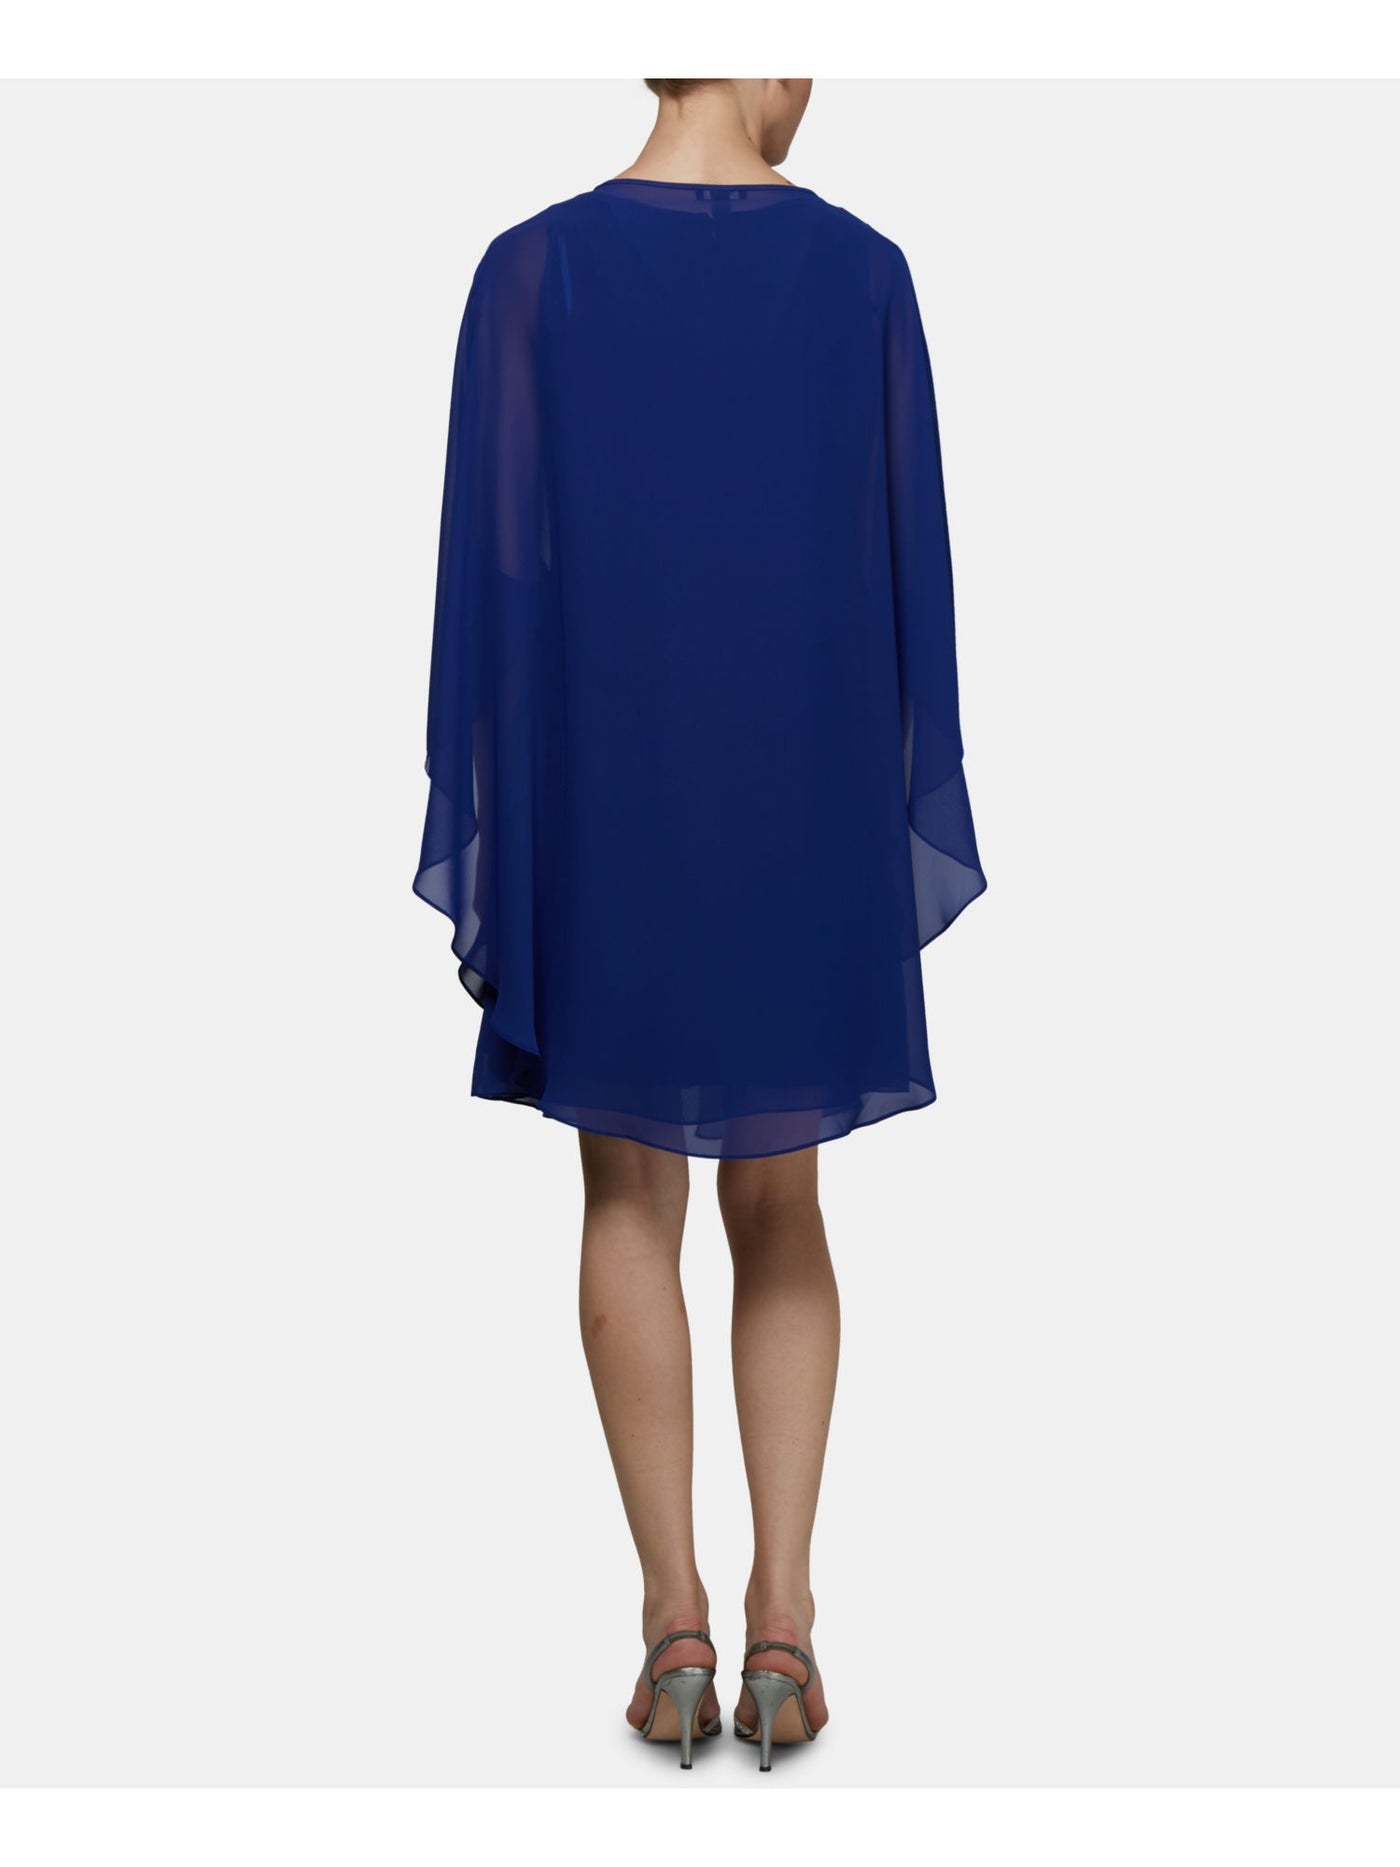 SLNY Womens Blue Sheer Open Front Short Sleeve Top 14